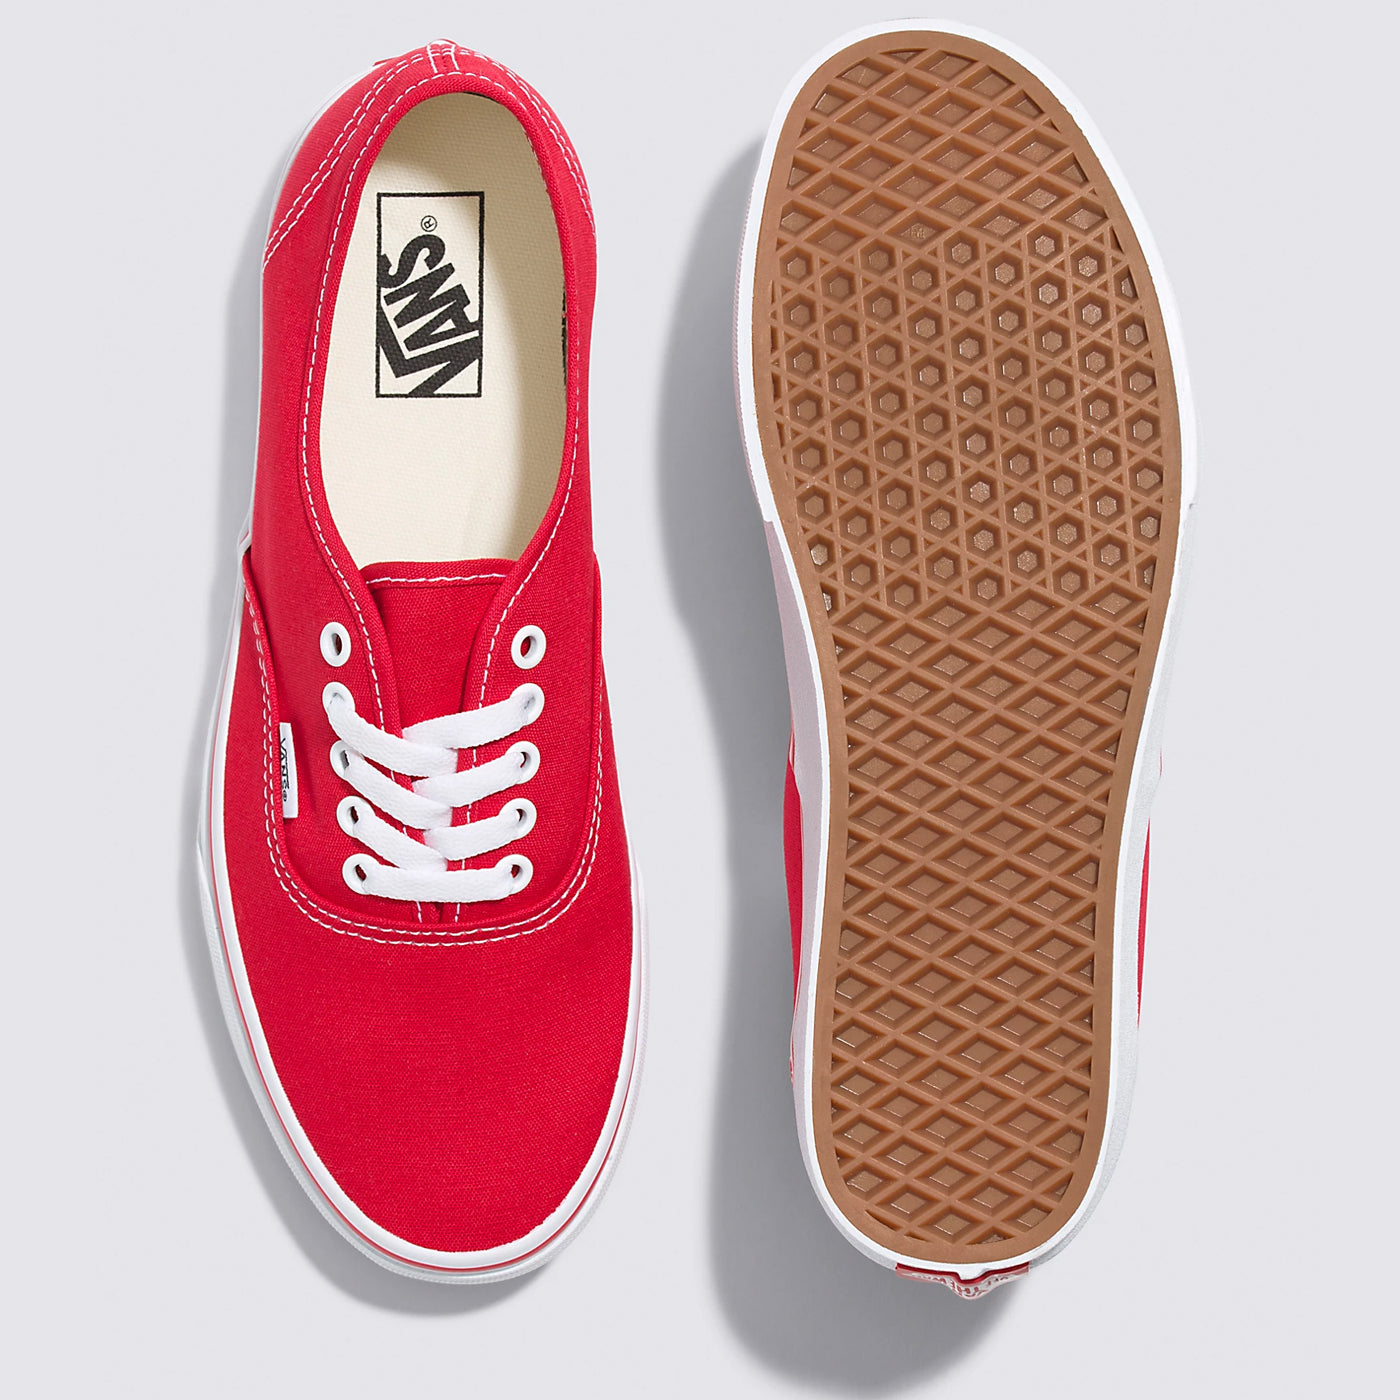 Vans | Authentic Shoes | Red